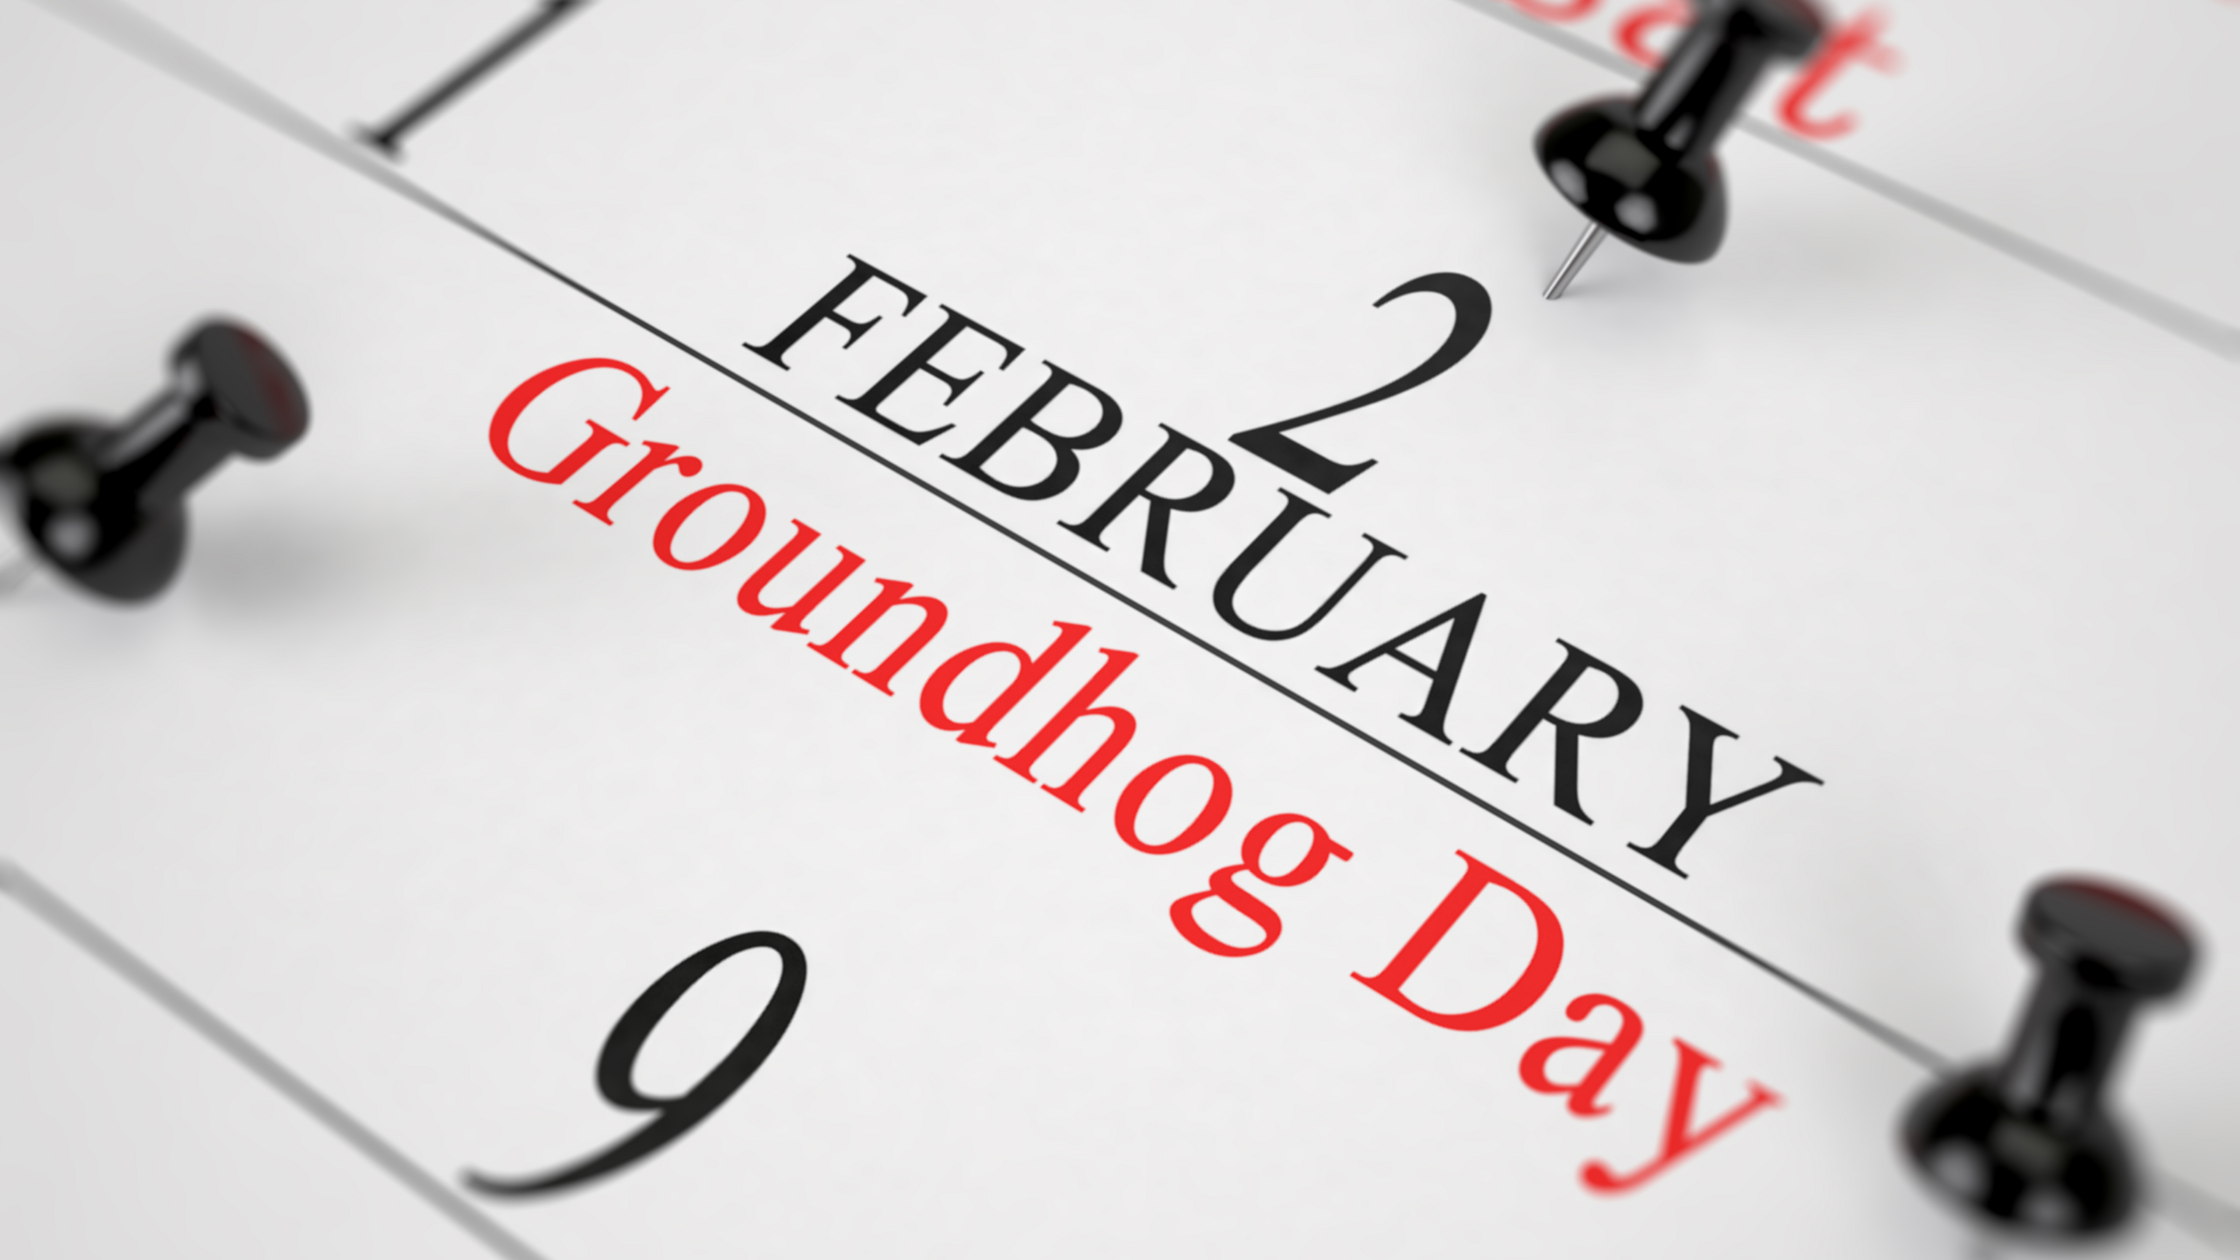 Calendar with February 2 Groundhog Day